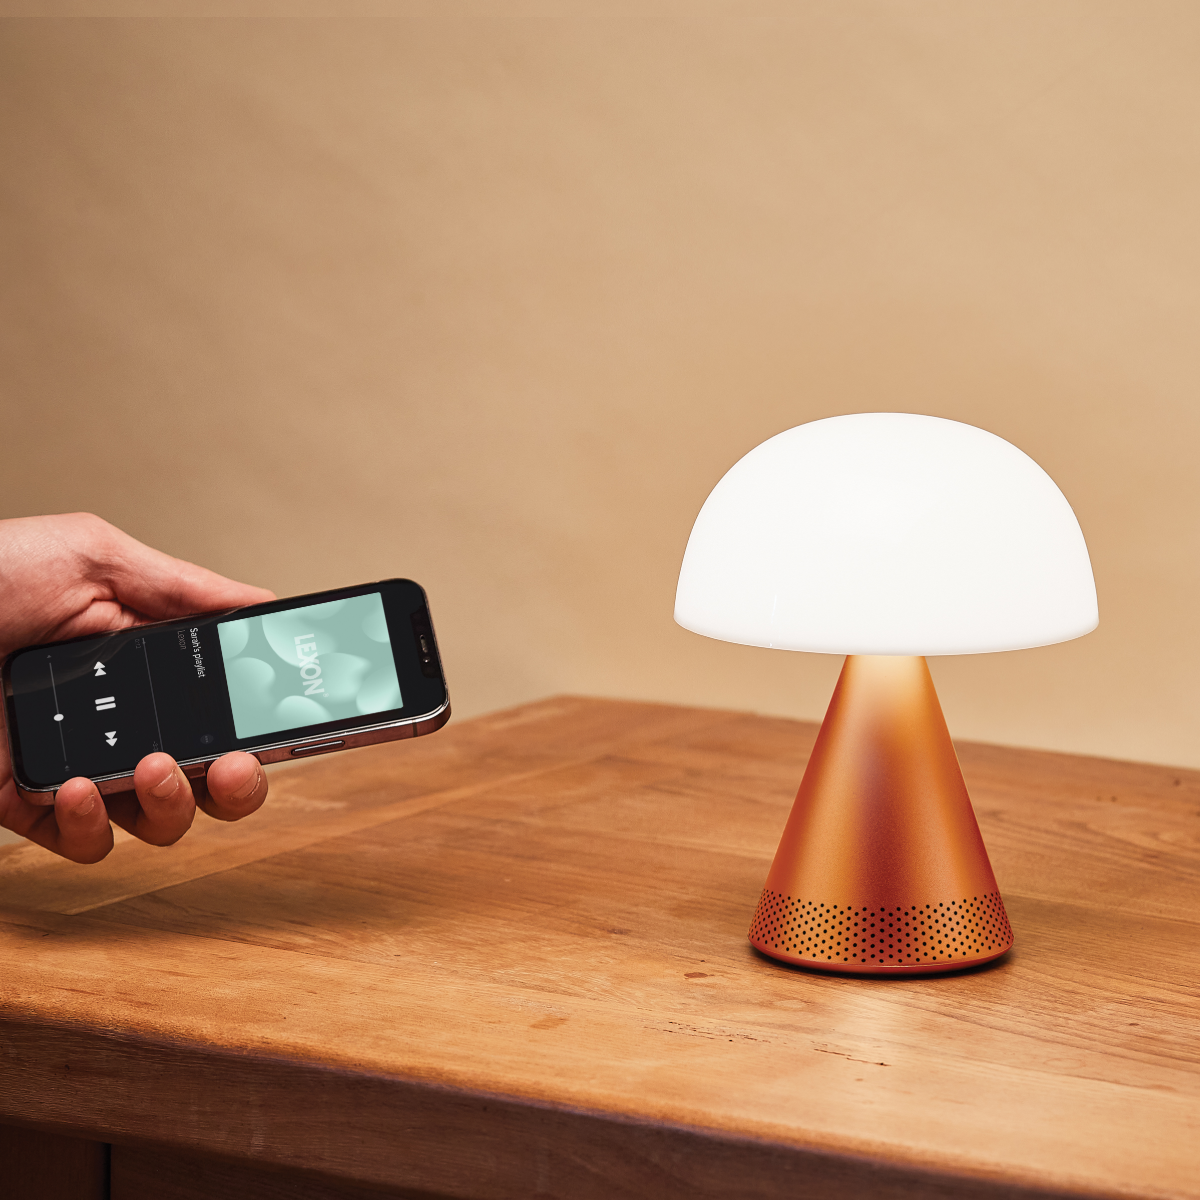 Lexon - MINA L (Audio) Rechargeable Portable LED Lamp with Bluetooth Speaker